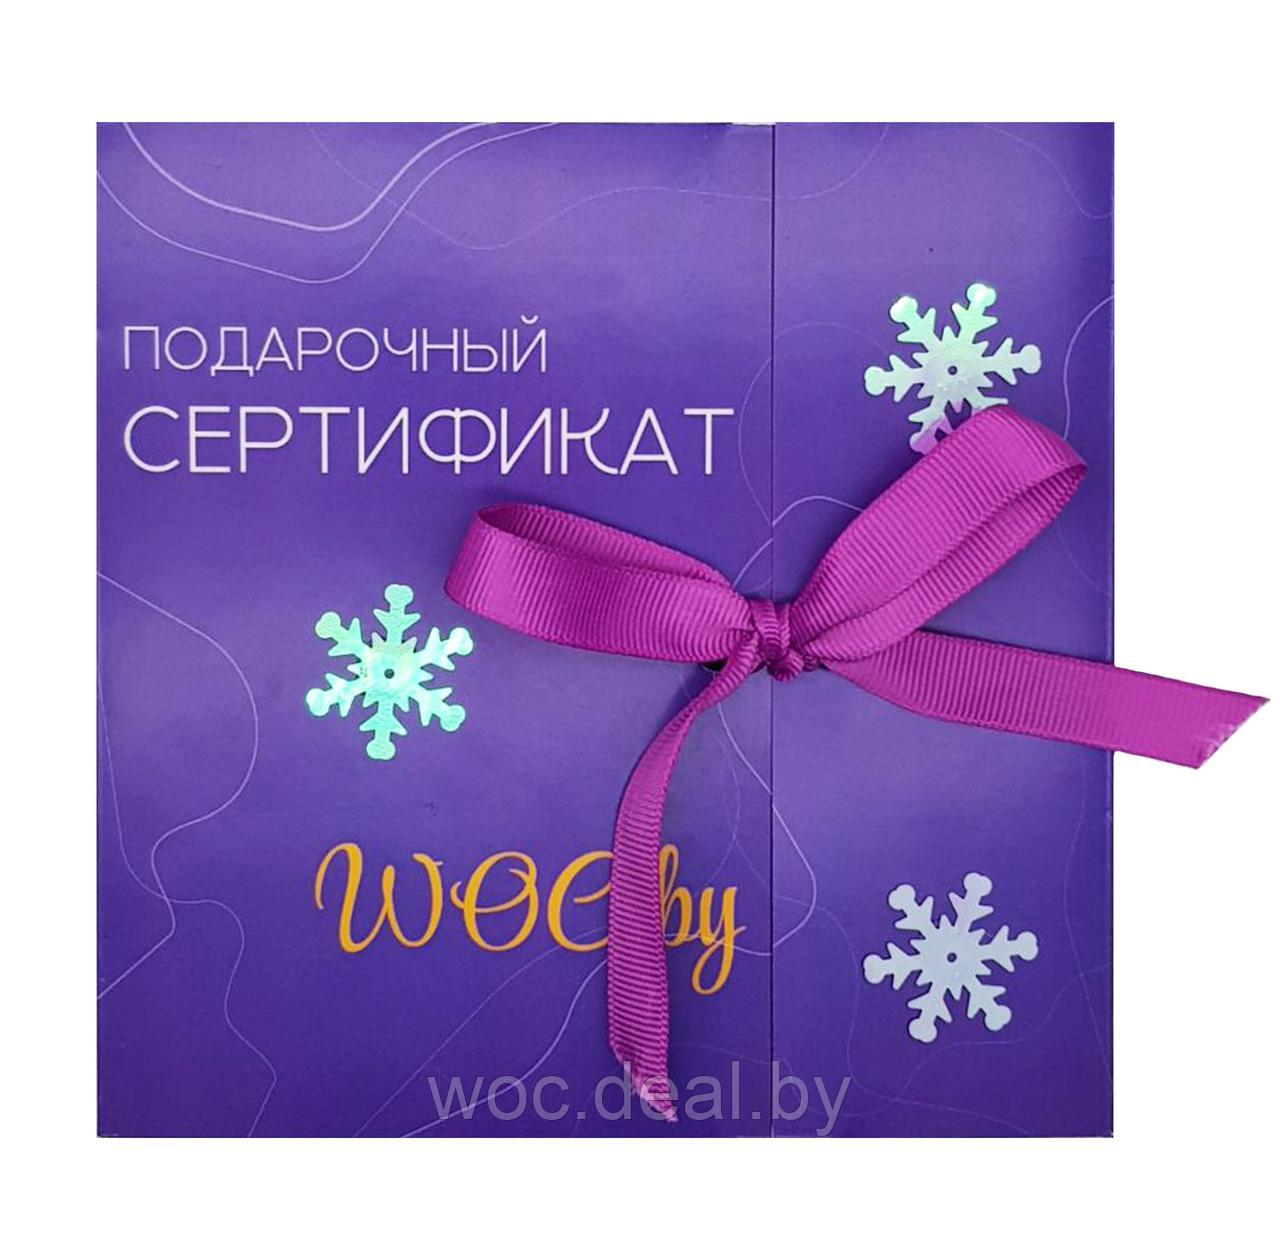 Подарочный сертификат woc.by, 50 BYN